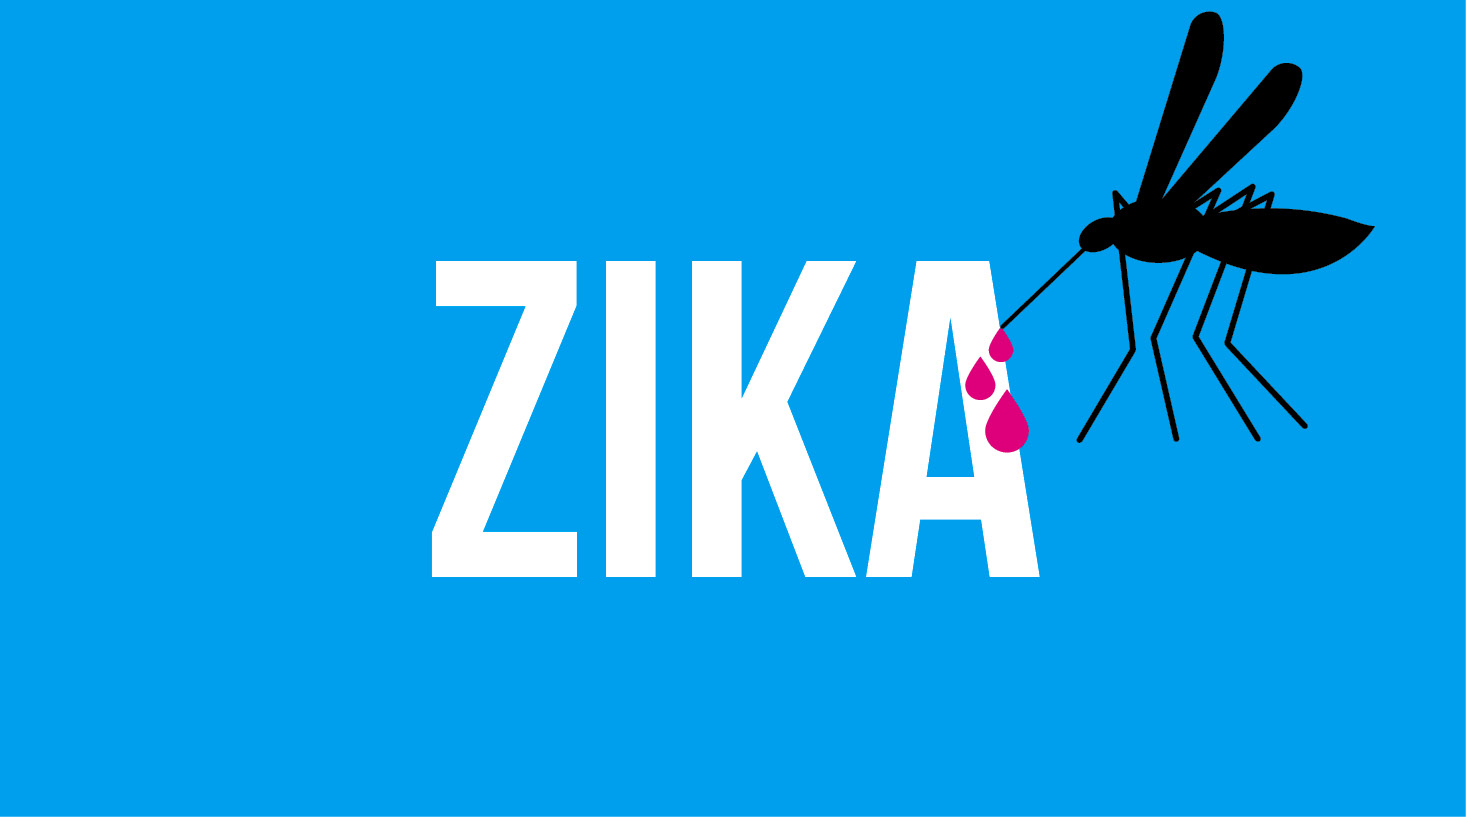  Prevén más de 14 millones de casos de zika en México